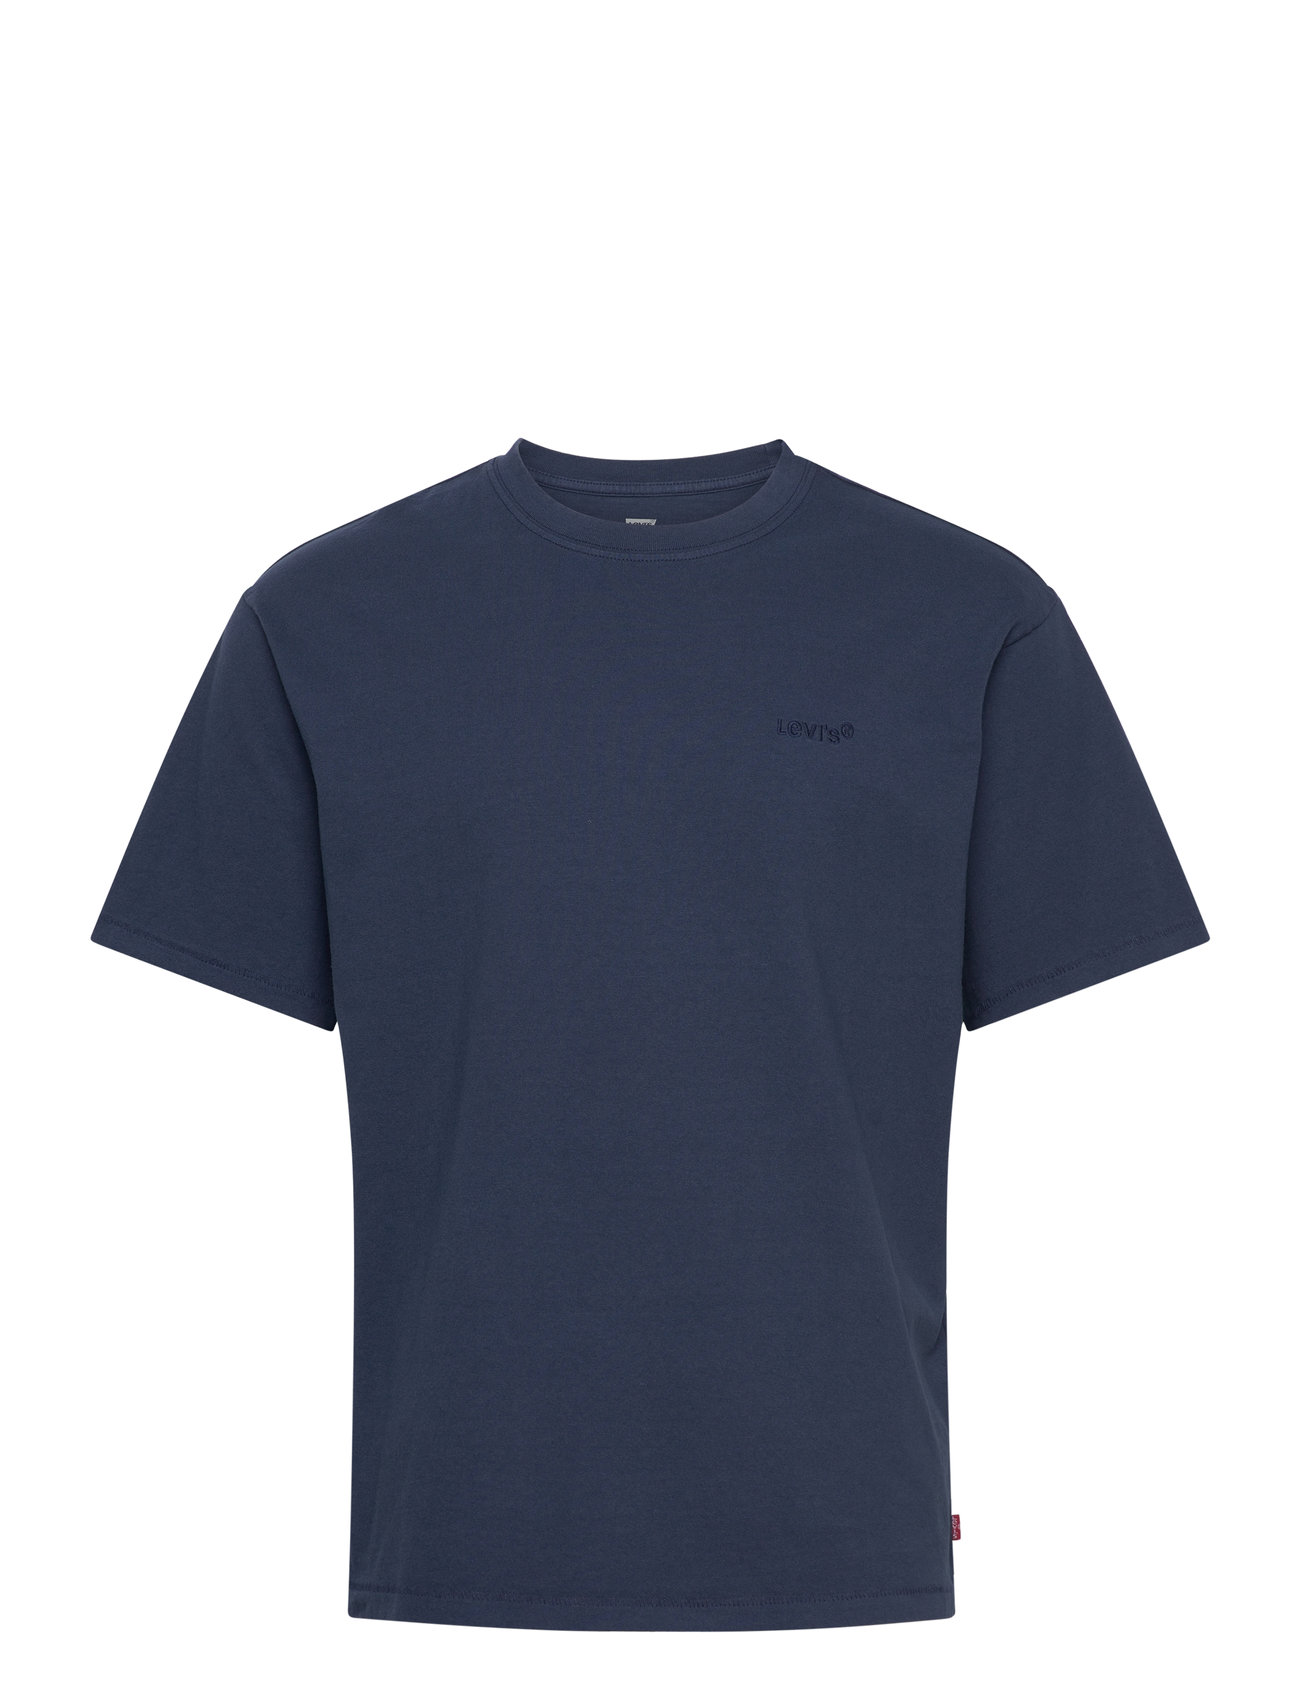 Red Tab Vintage Tee Dress Blue Tops T-shirts Short-sleeved Navy LEVI´S Men